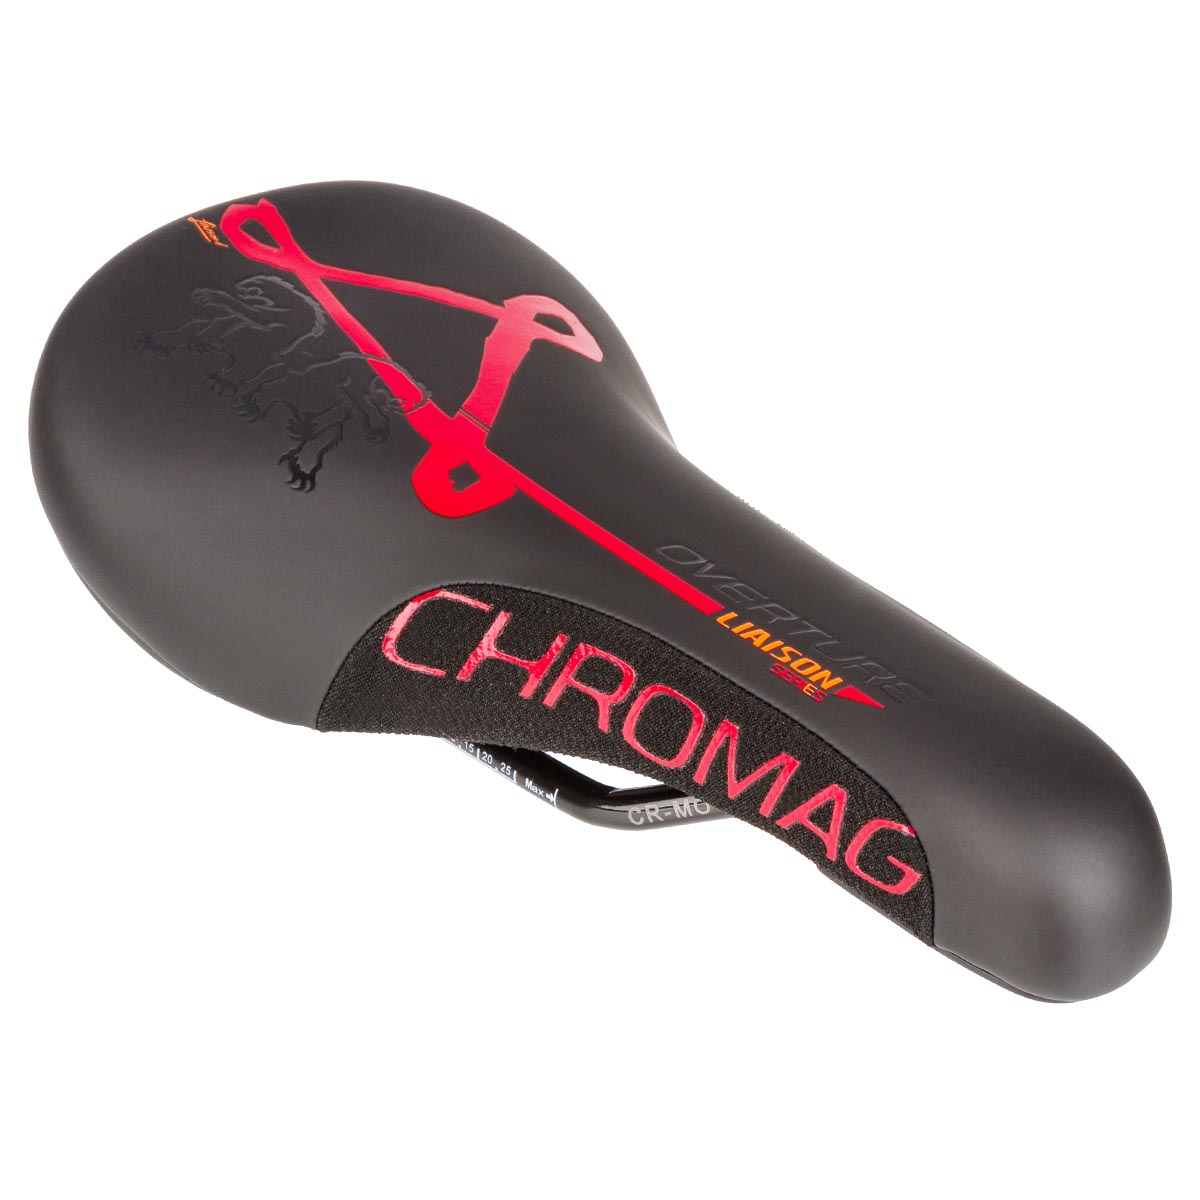 Chromag Saddle Overture 2018 Black/Red, 243 x 136 mm